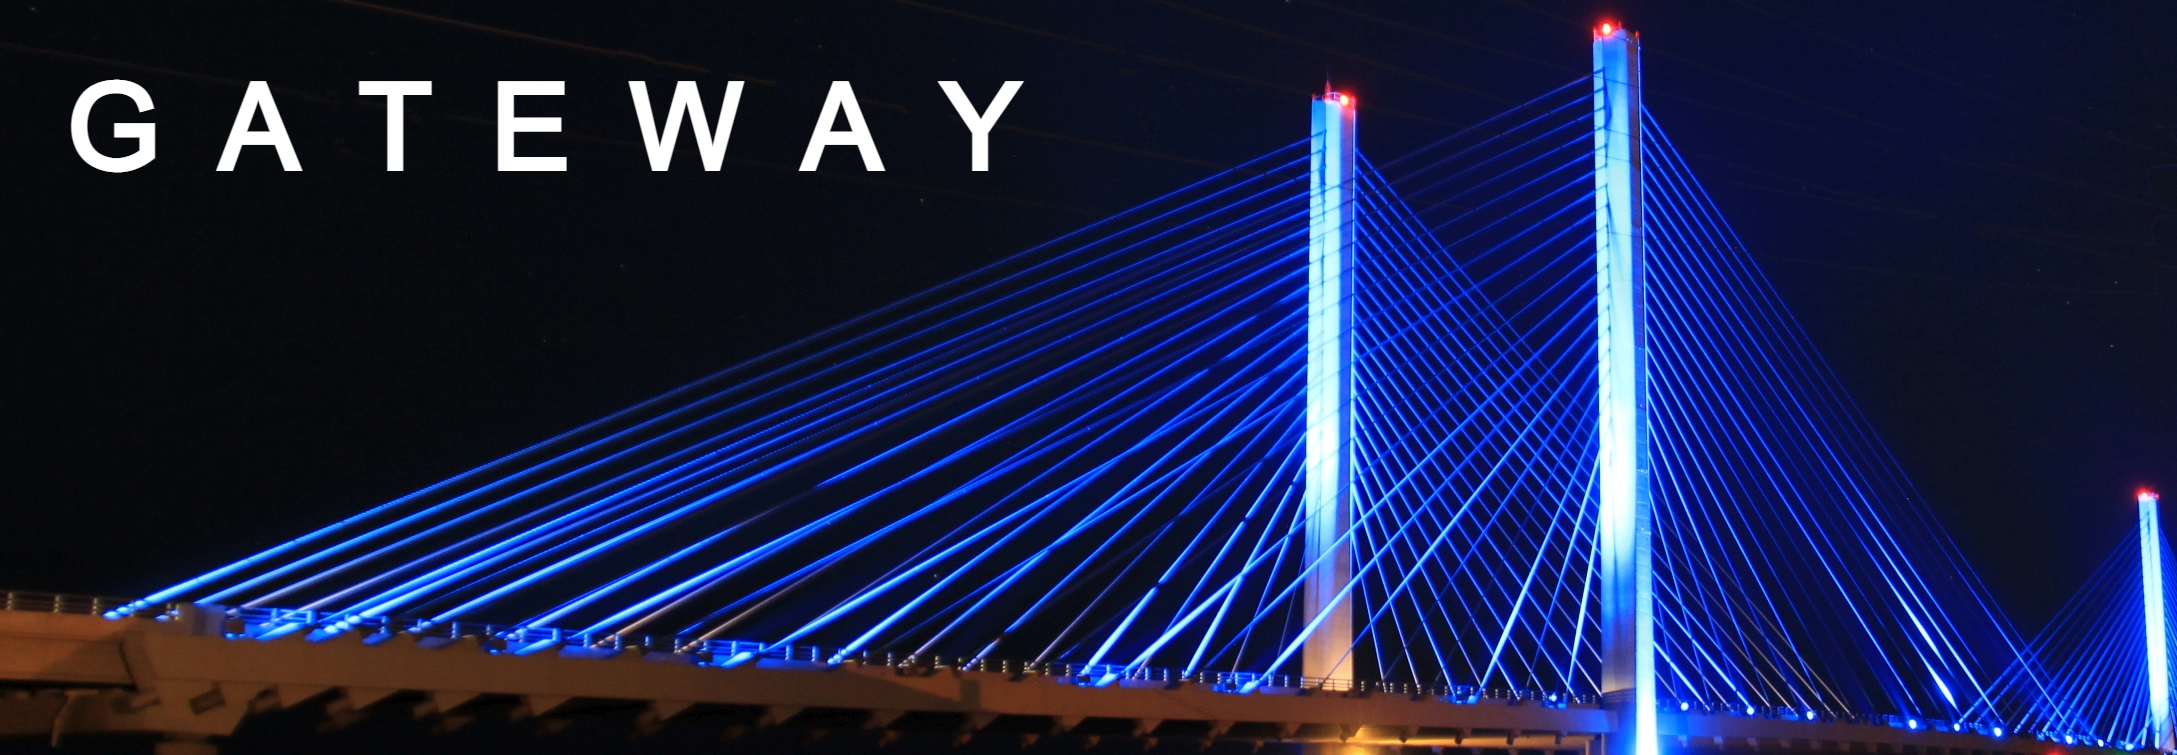 Gateway Bridge Image